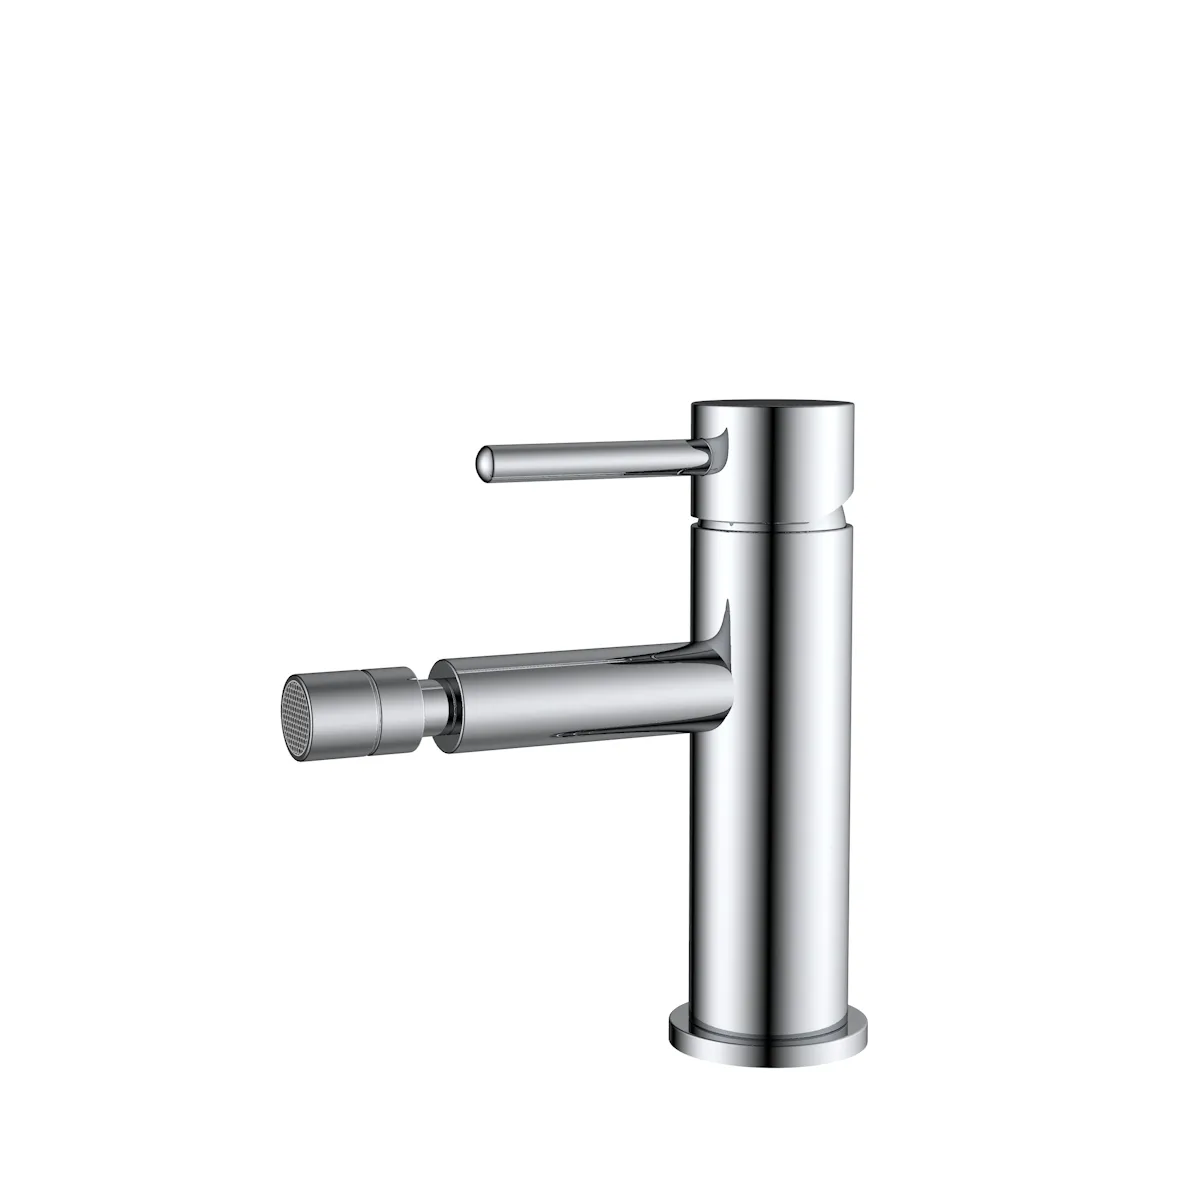 EILSA Bathrom Solution Single Handle Bidet Faucet Deck Mounted